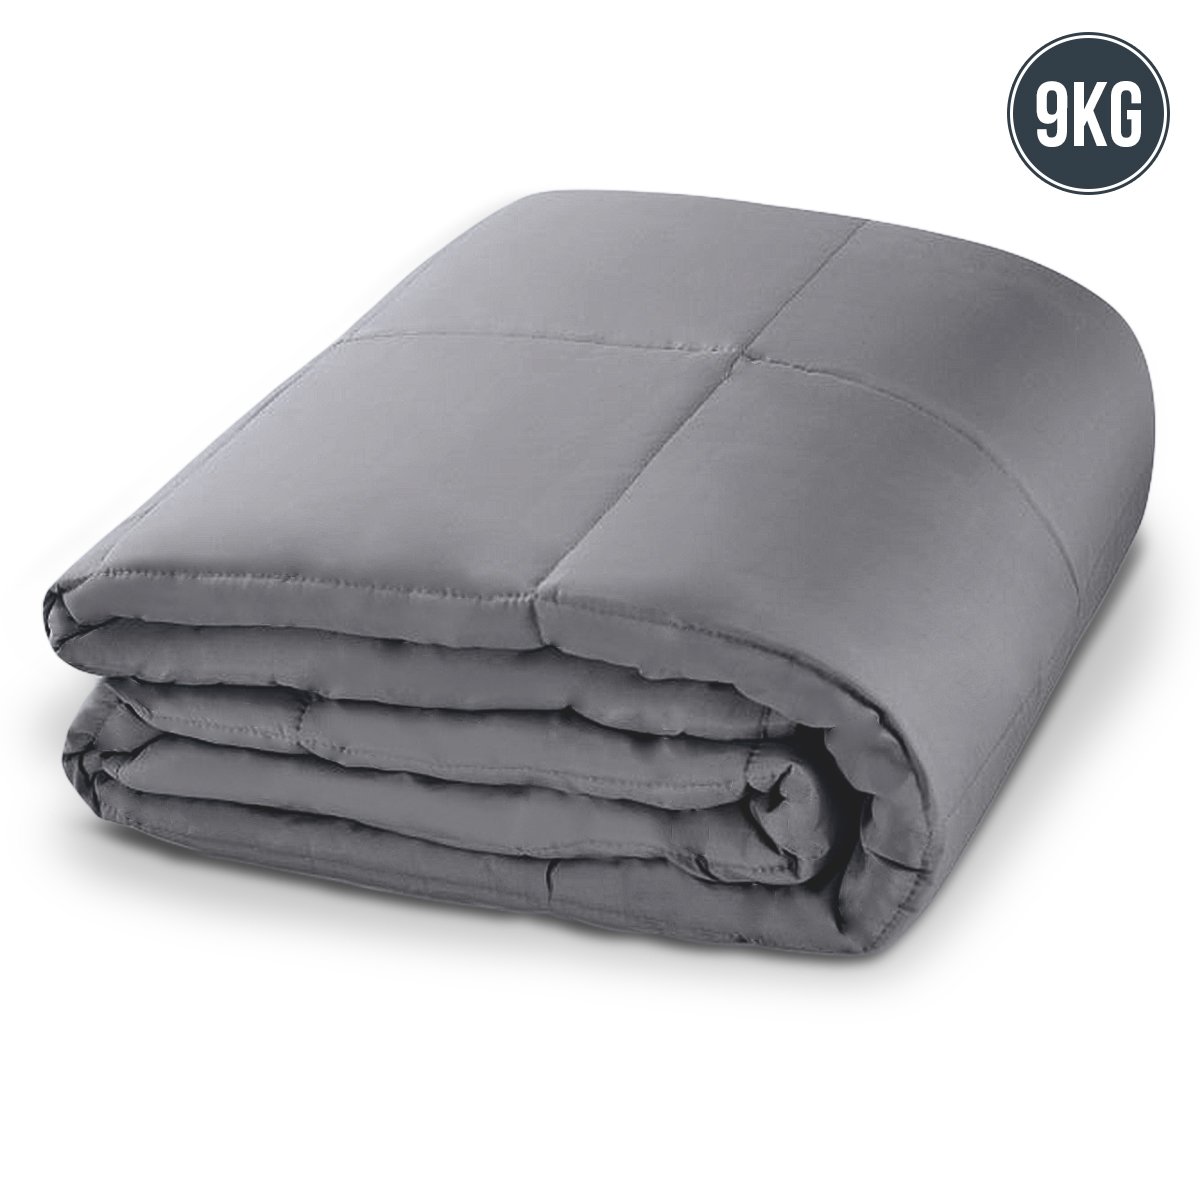 Laura Hill Weighted Blanket Heavy Quilt Doona 9Kg - Grey 2